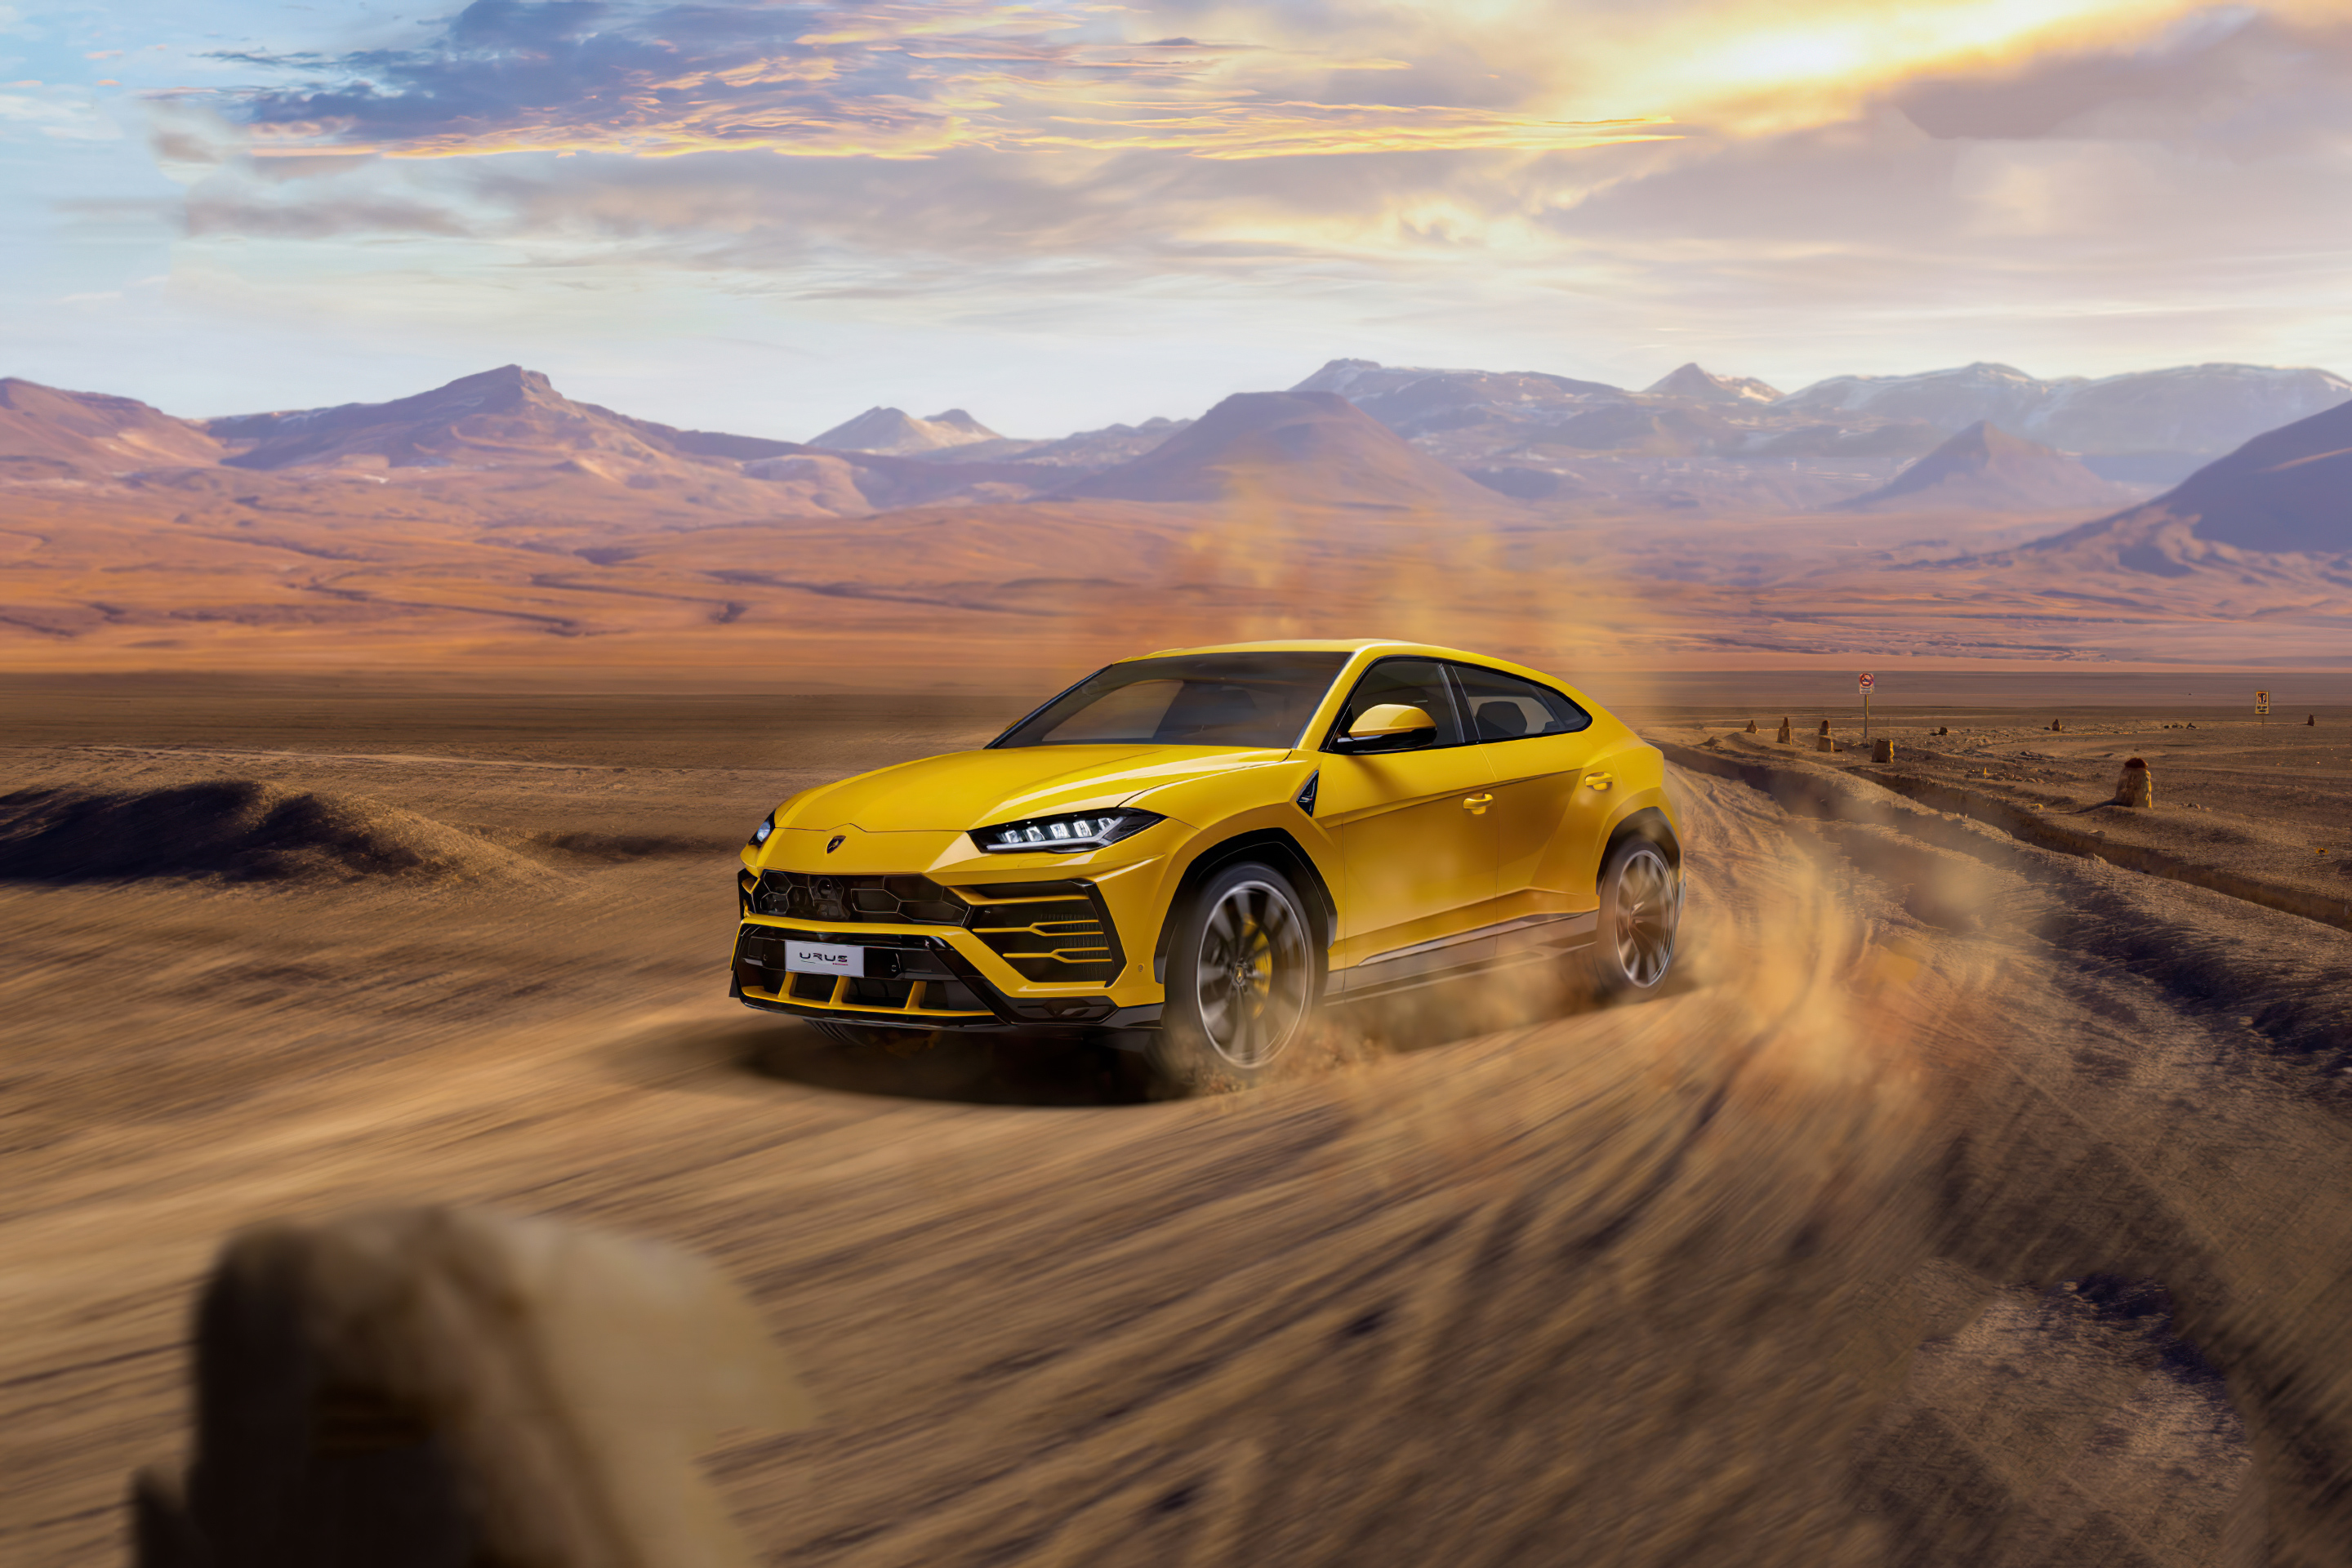 The yellow Lamborghini Urus rides on dust.